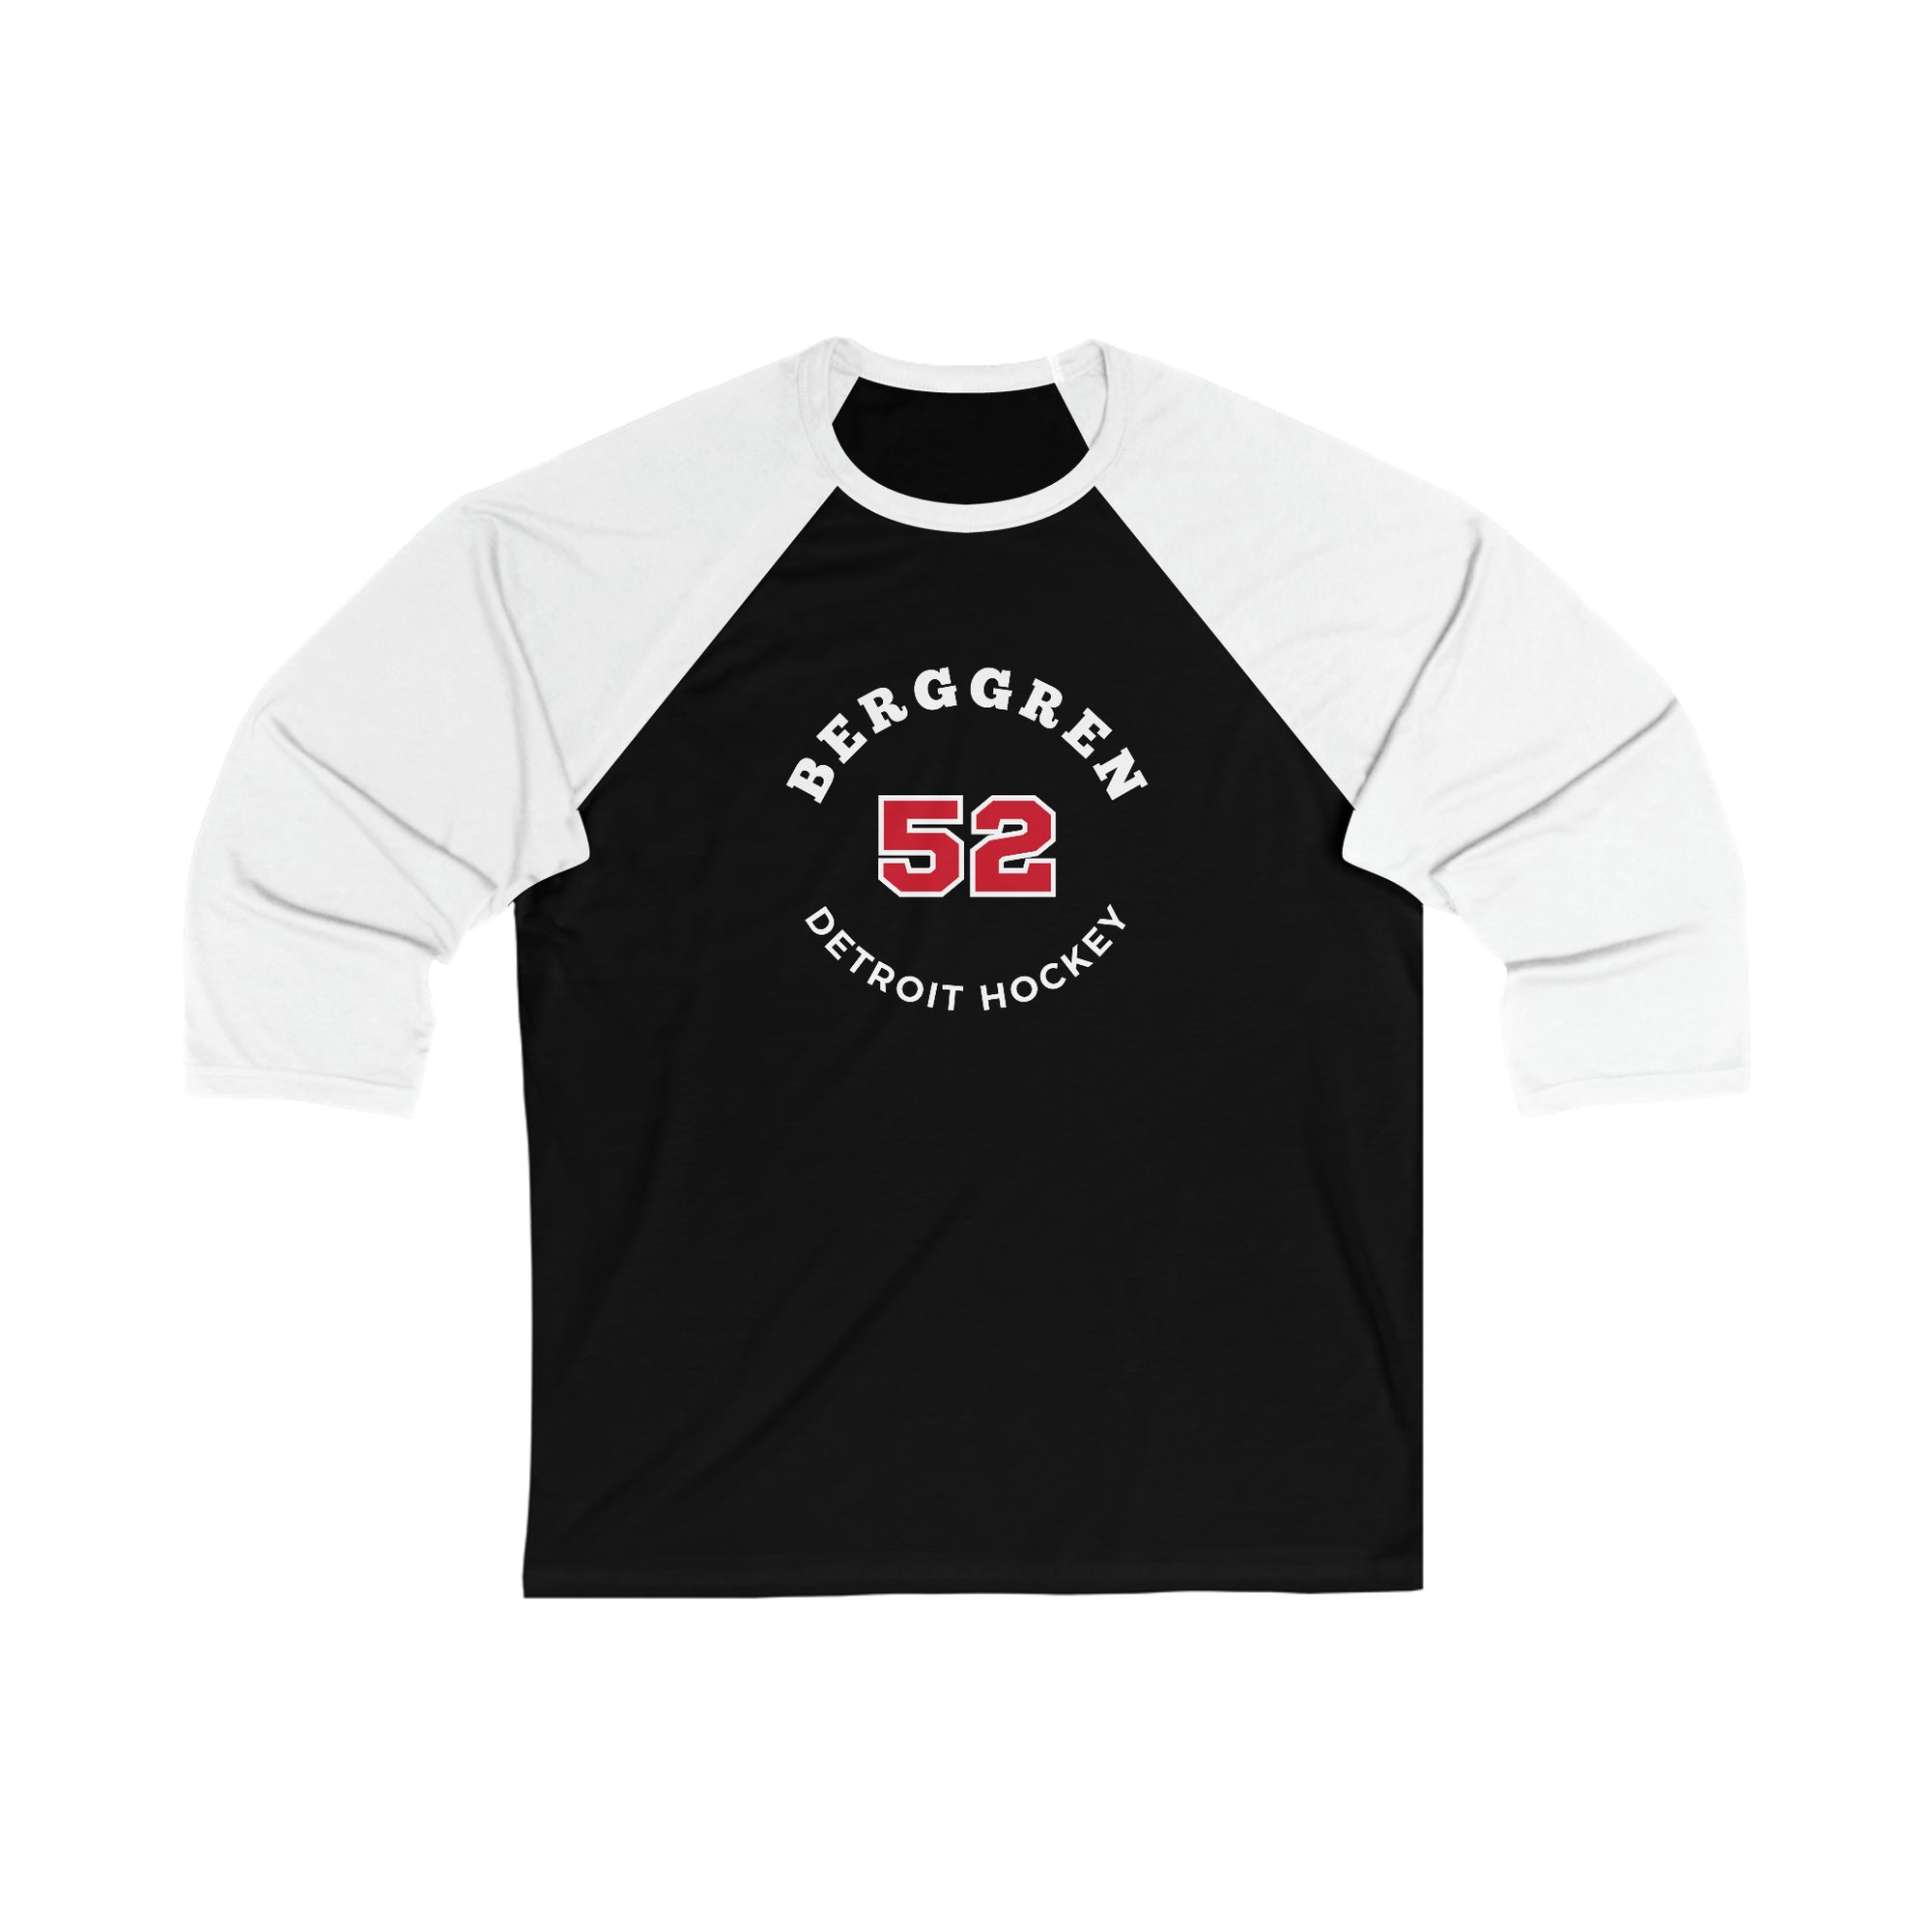 Berggren 52 Detroit Hockey Number Arch Design Unisex Tri-Blend 3/4 Sleeve Raglan Baseball Shirt